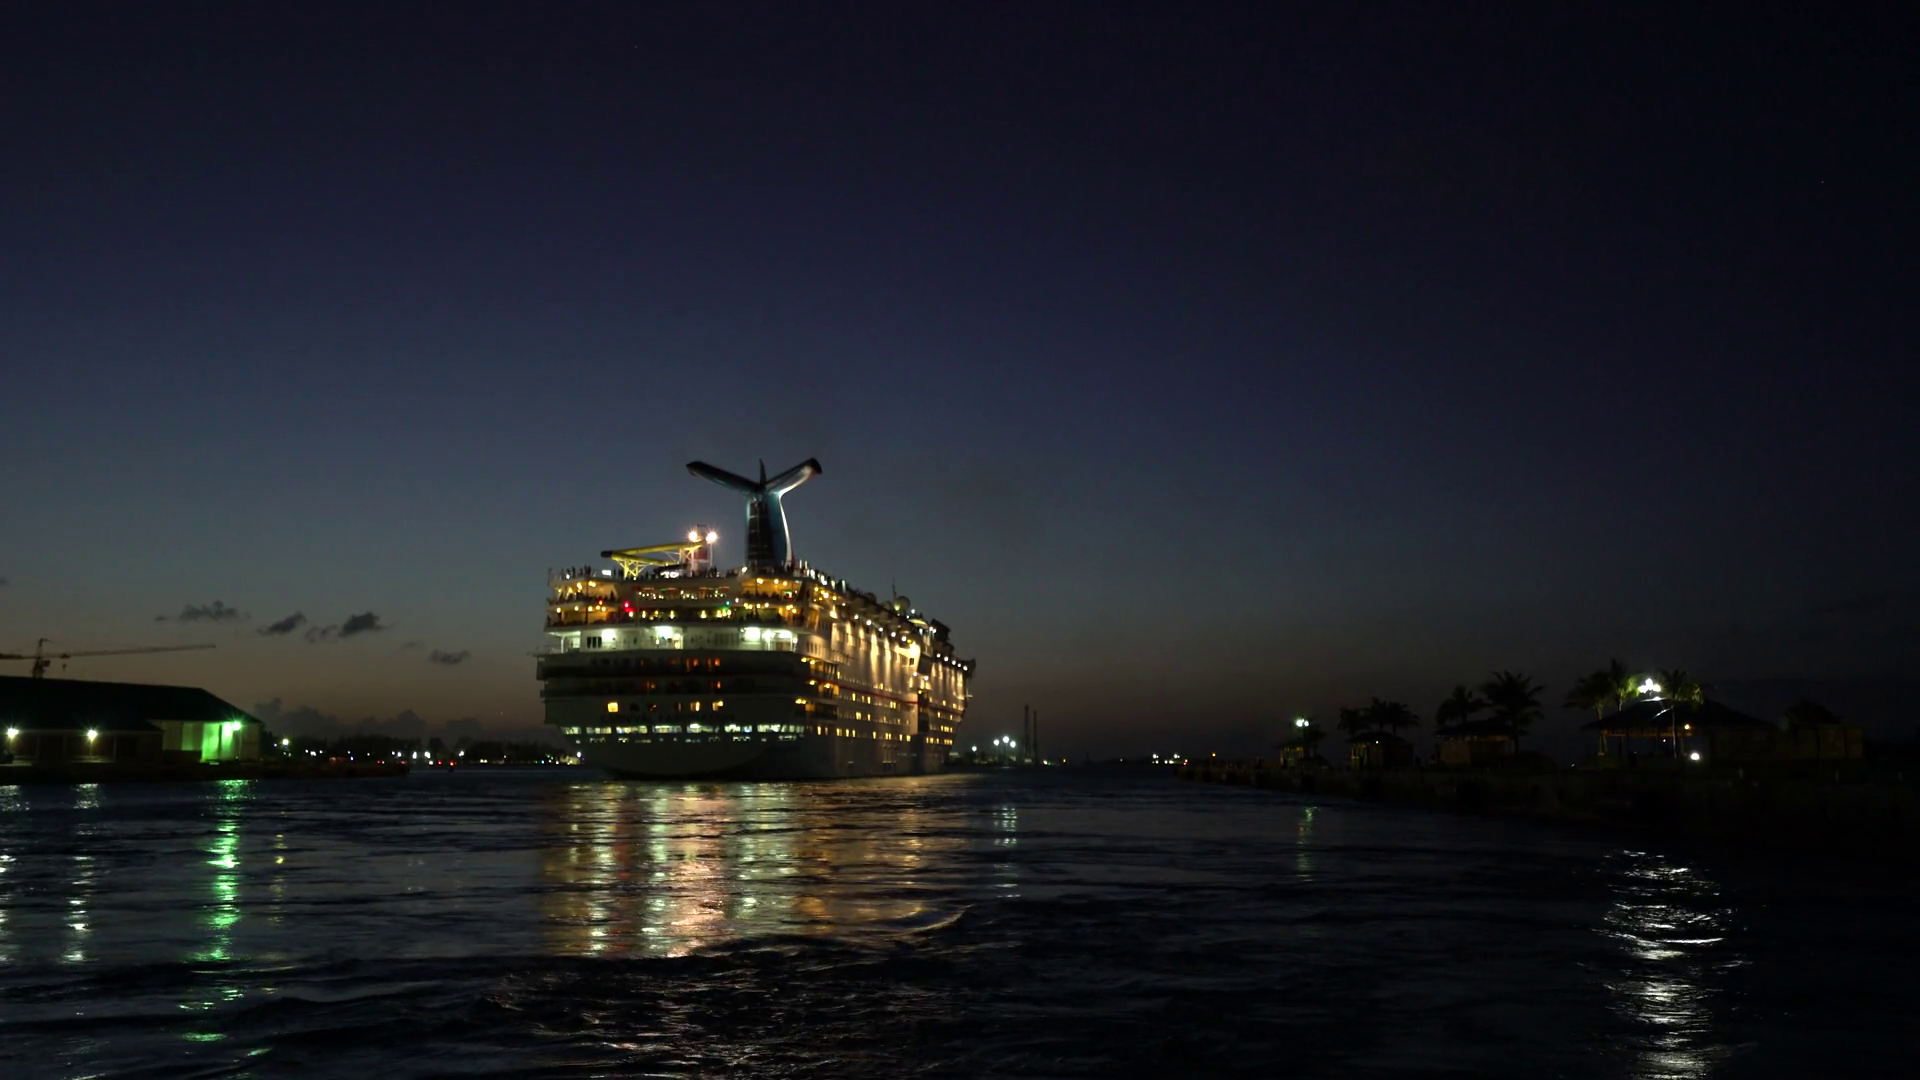 Illuminating cruise ship departs at night - Anthem of the seas ...